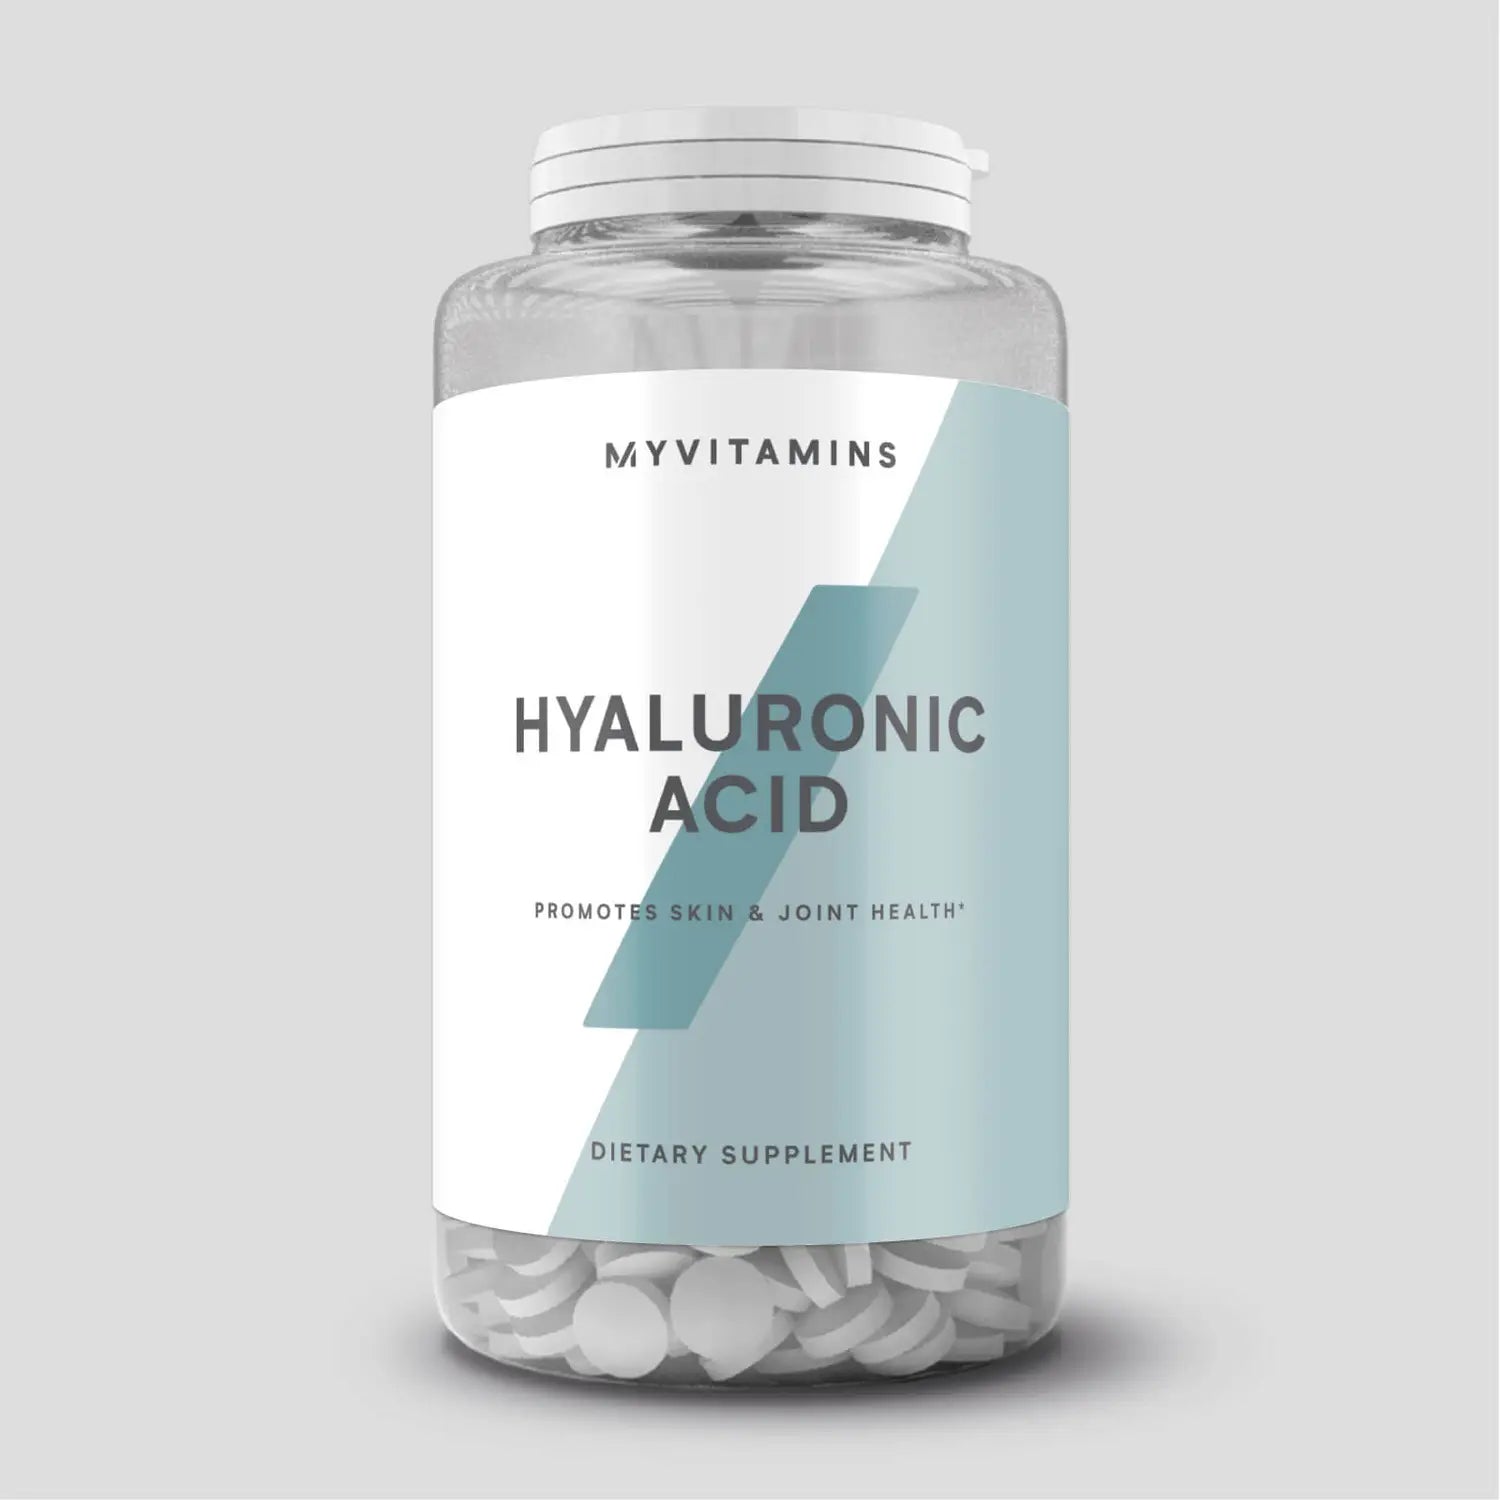 MYVITAMINS - HYALURONIC ACID (30caps)